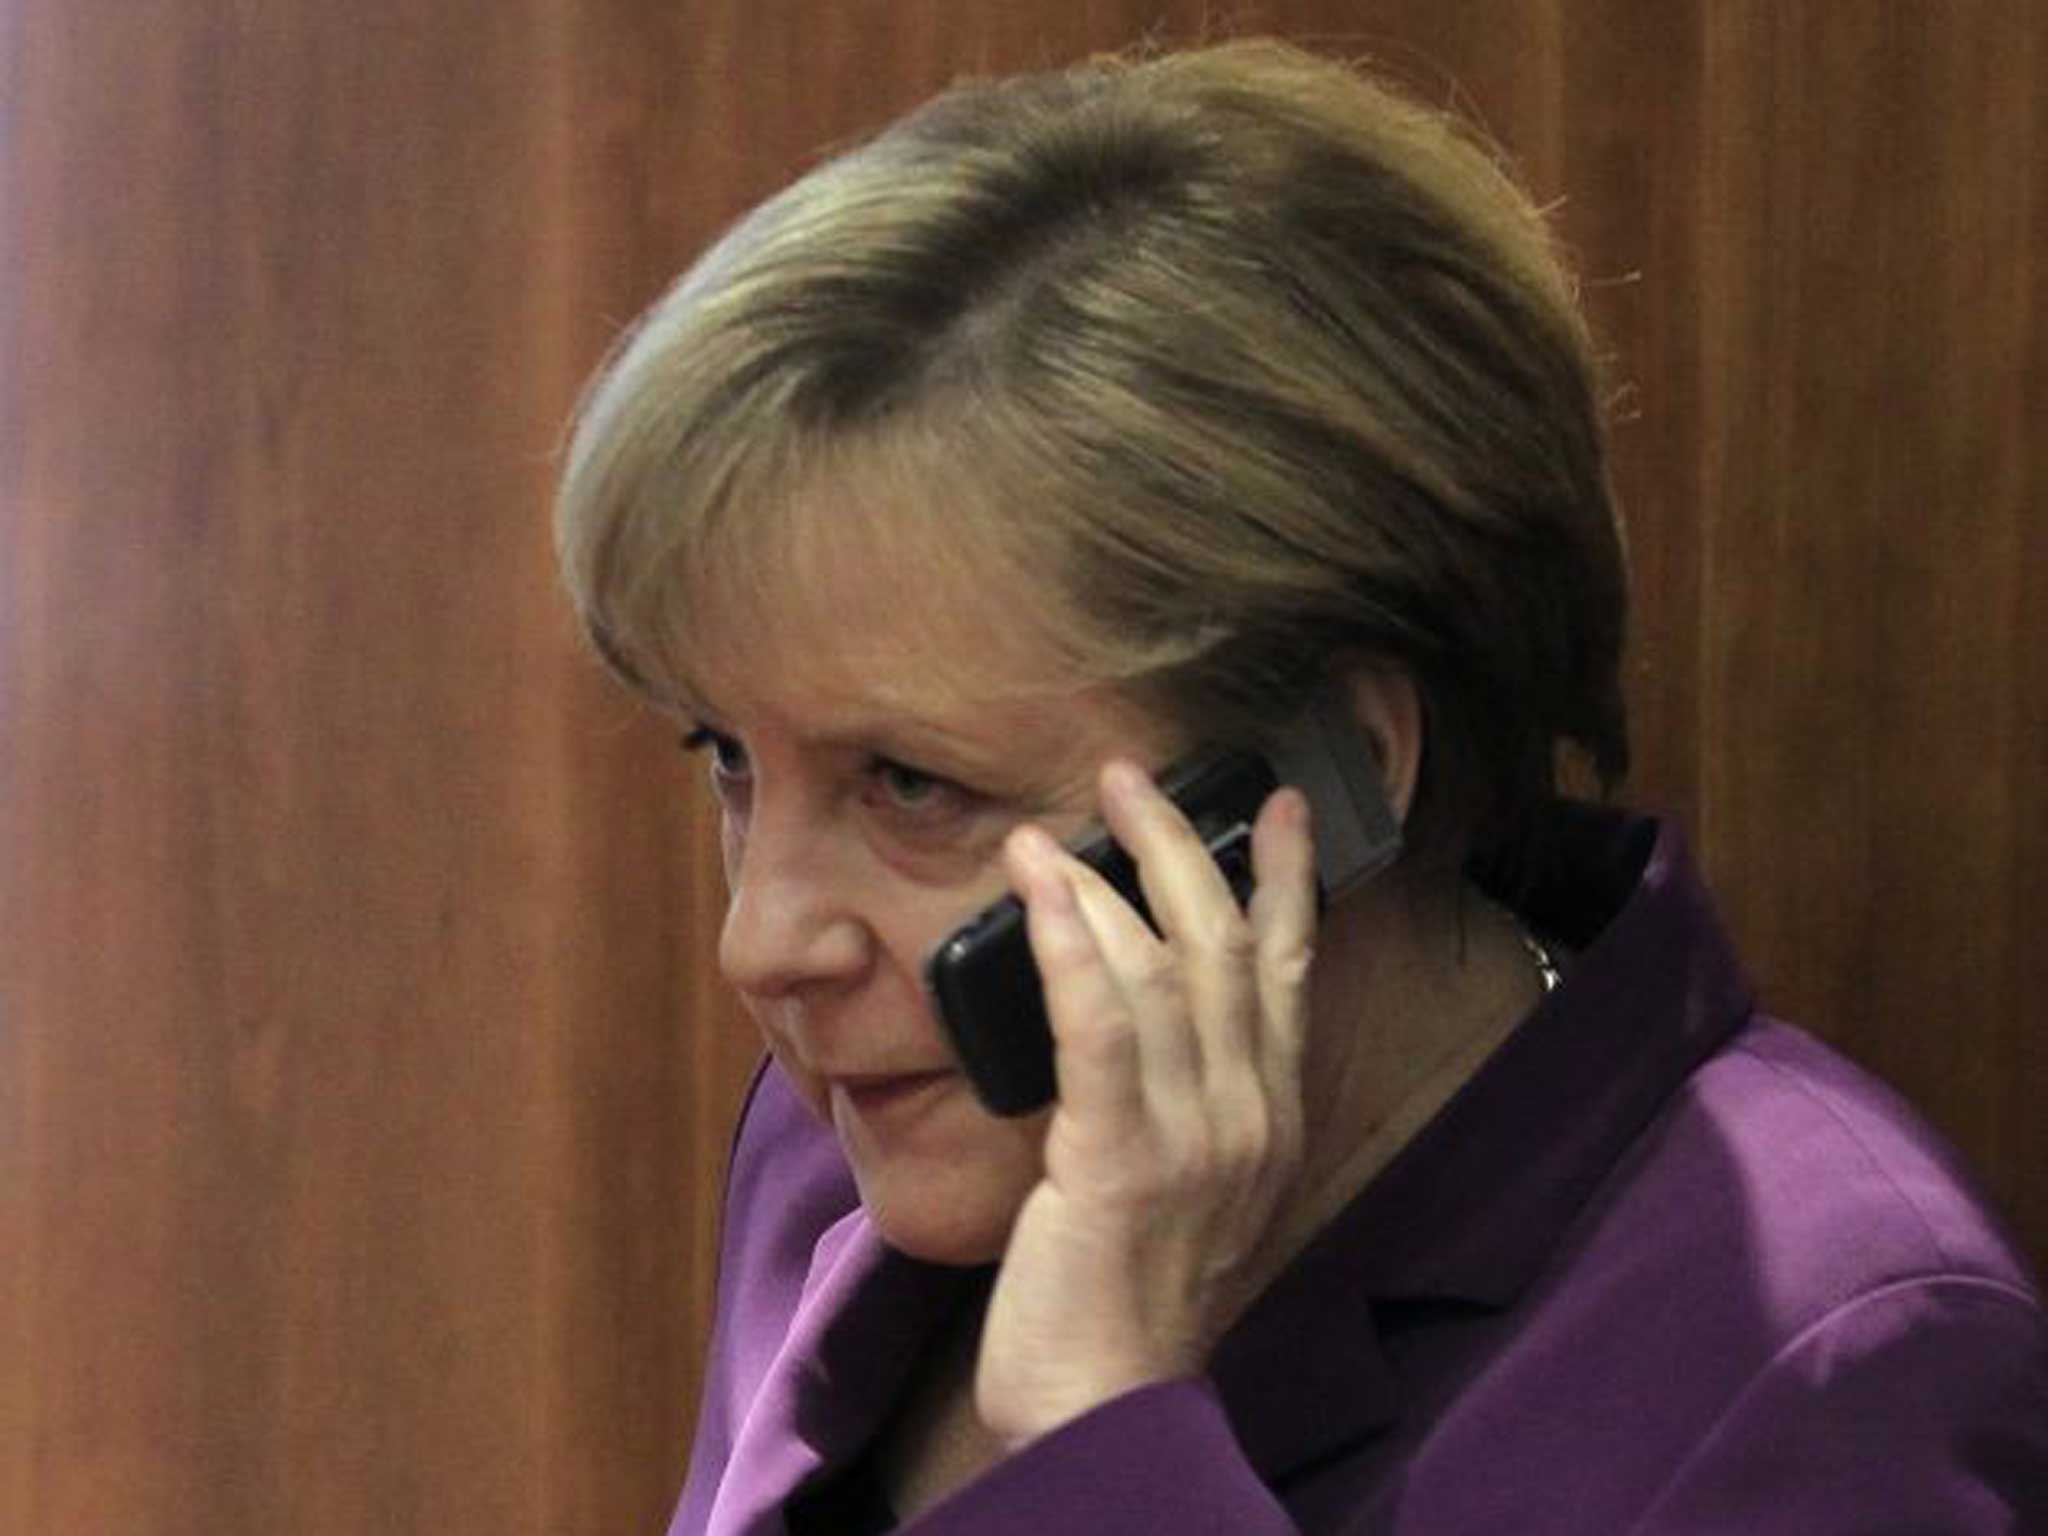 Angela Merkel discovered last week that her phone was tapped